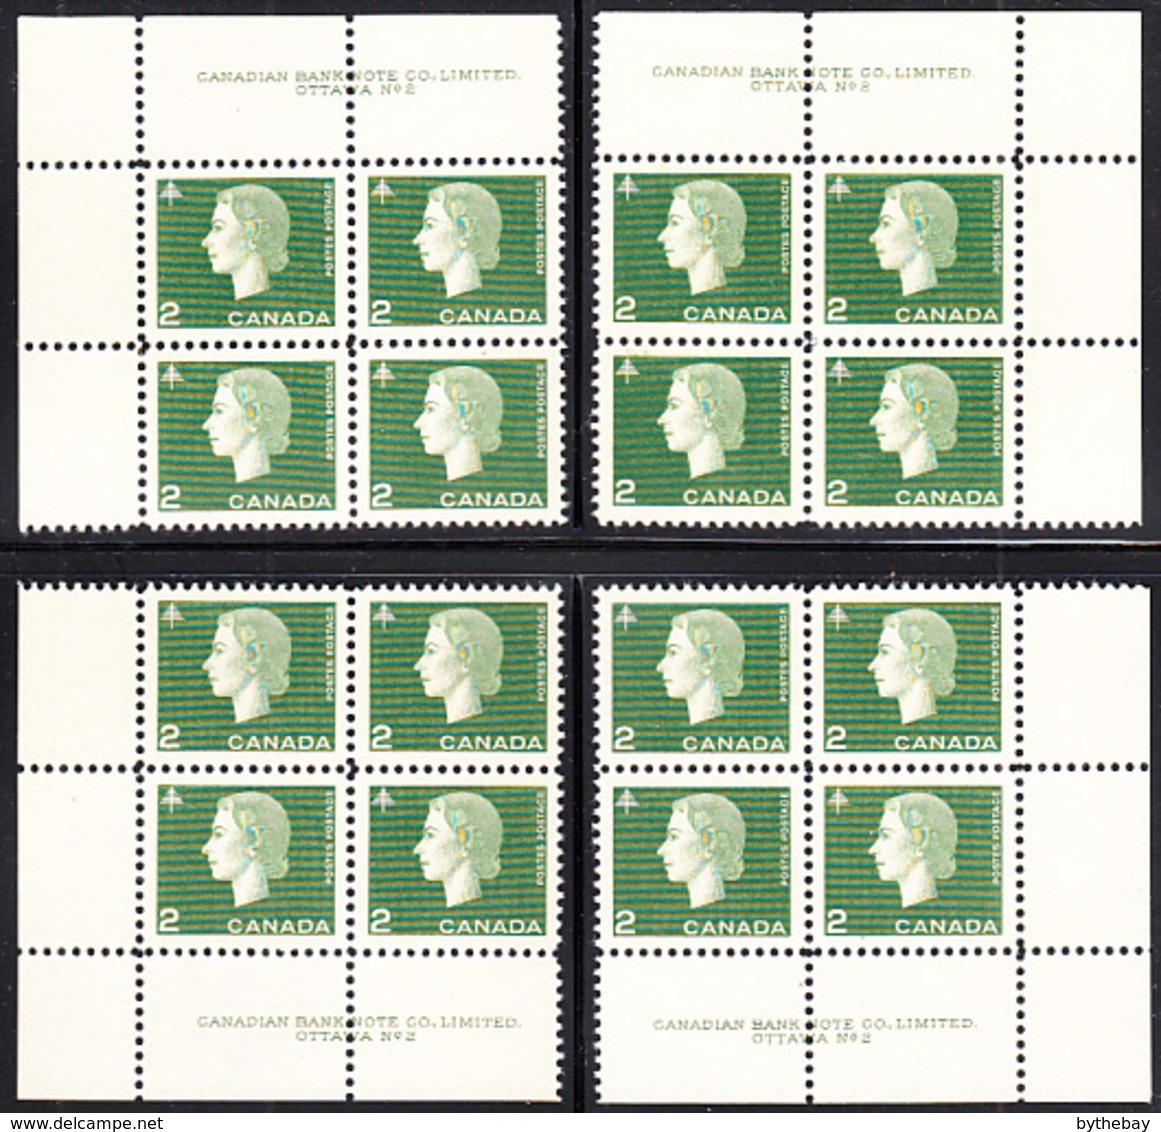 Canada 1963 MNH Sc #402 2c QEII Cameo Plate #2 Set Of 4 Blocks - Plate Number & Inscriptions